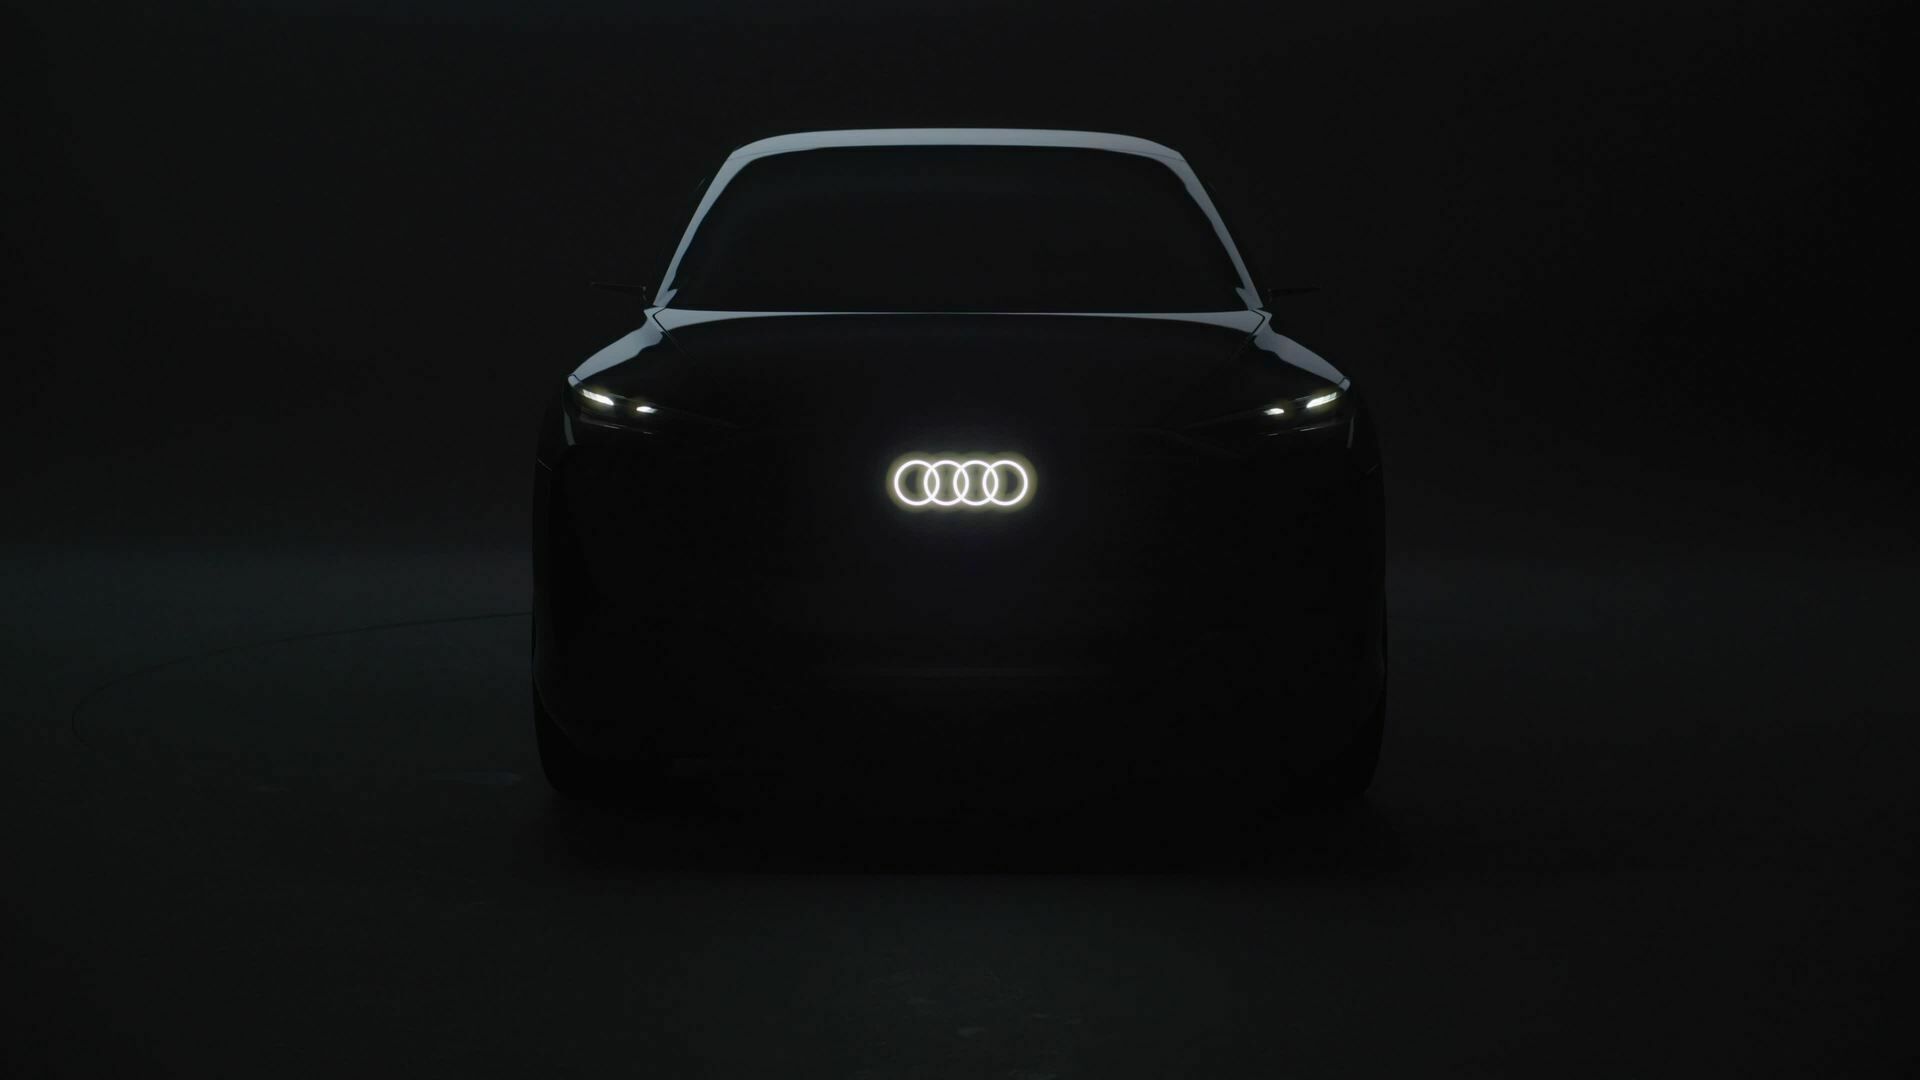 Das Design des Audi urbansphere concept